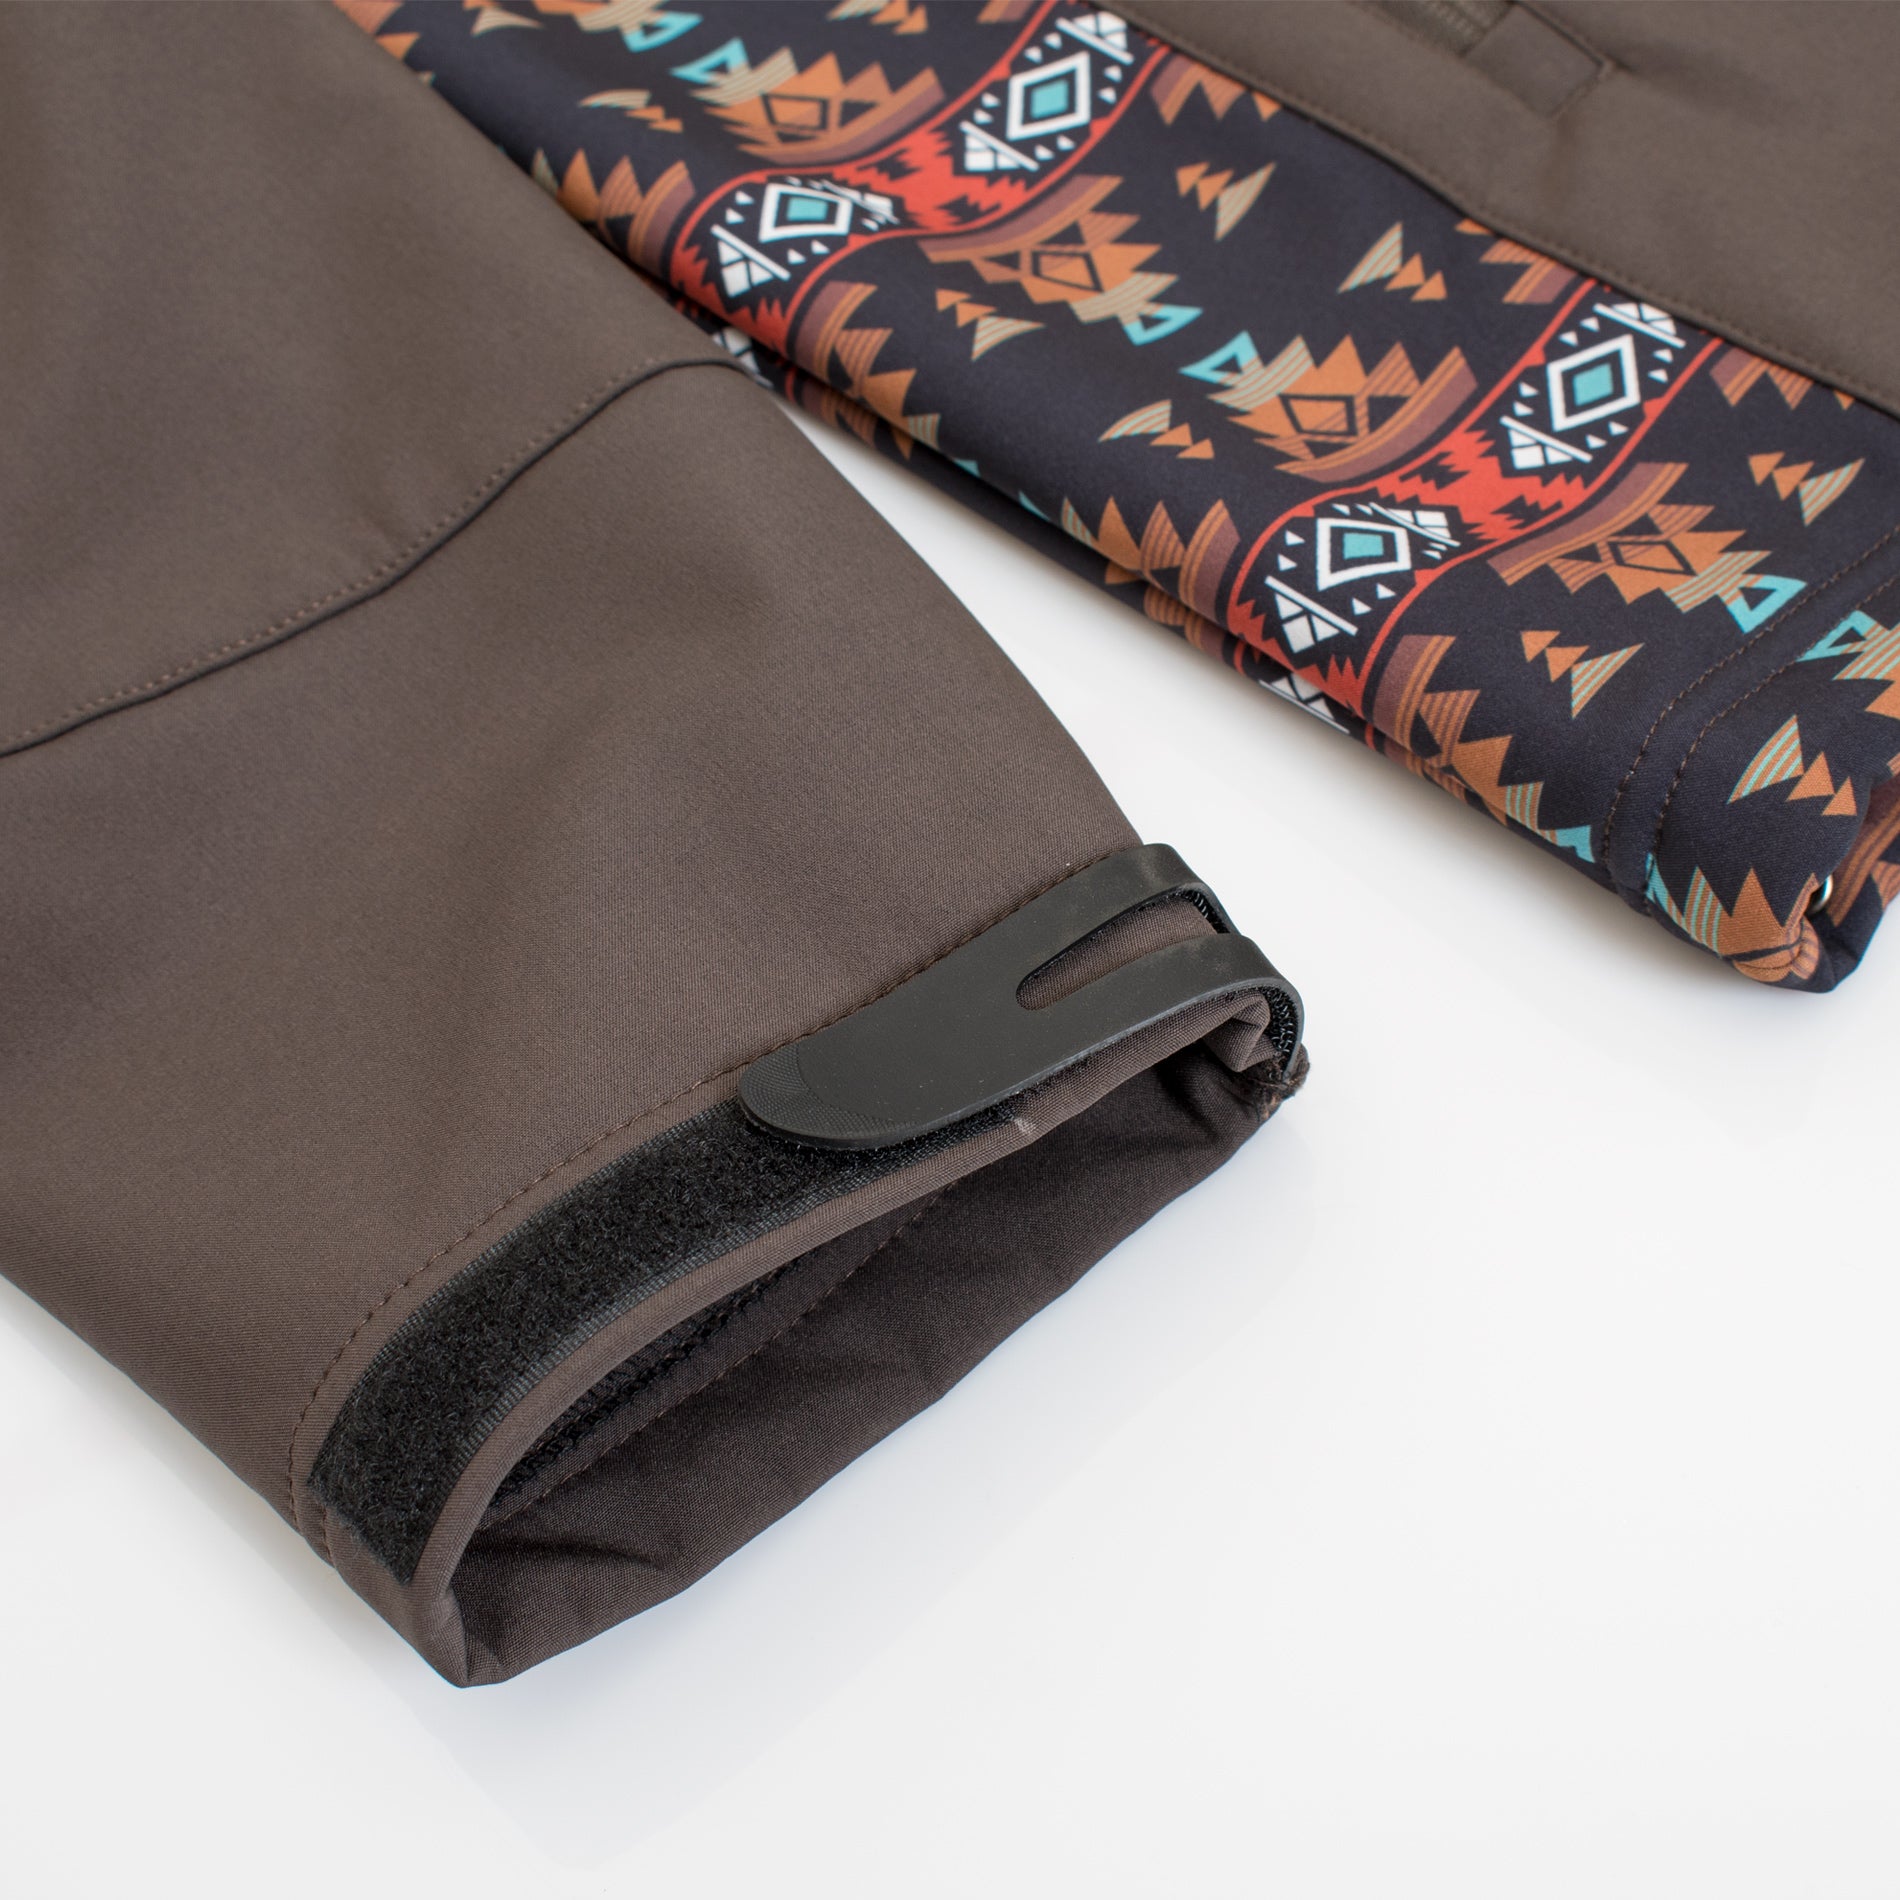 Men's Soft Shell Bonded Jacket With Western Aztec Print -NJ650EMB-AZ-BROWN-RUST